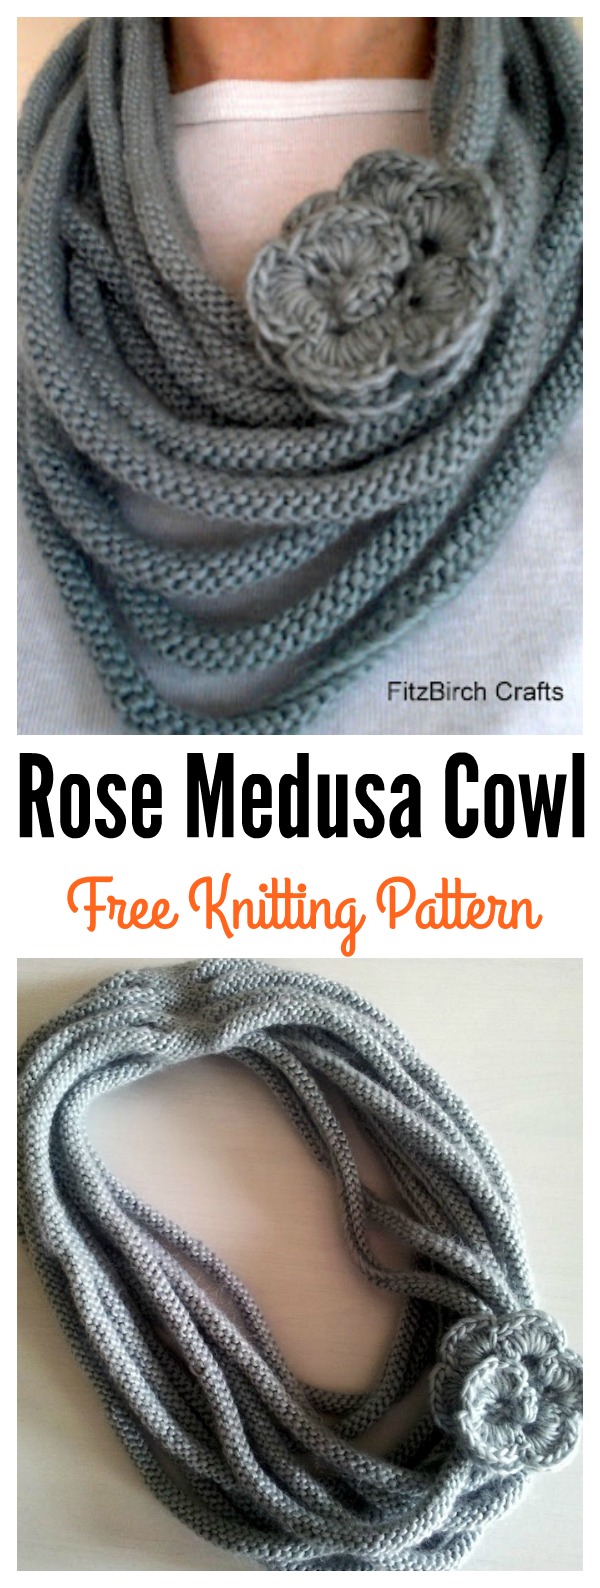 Rose Medusa Cowl Free Knitting Pattern